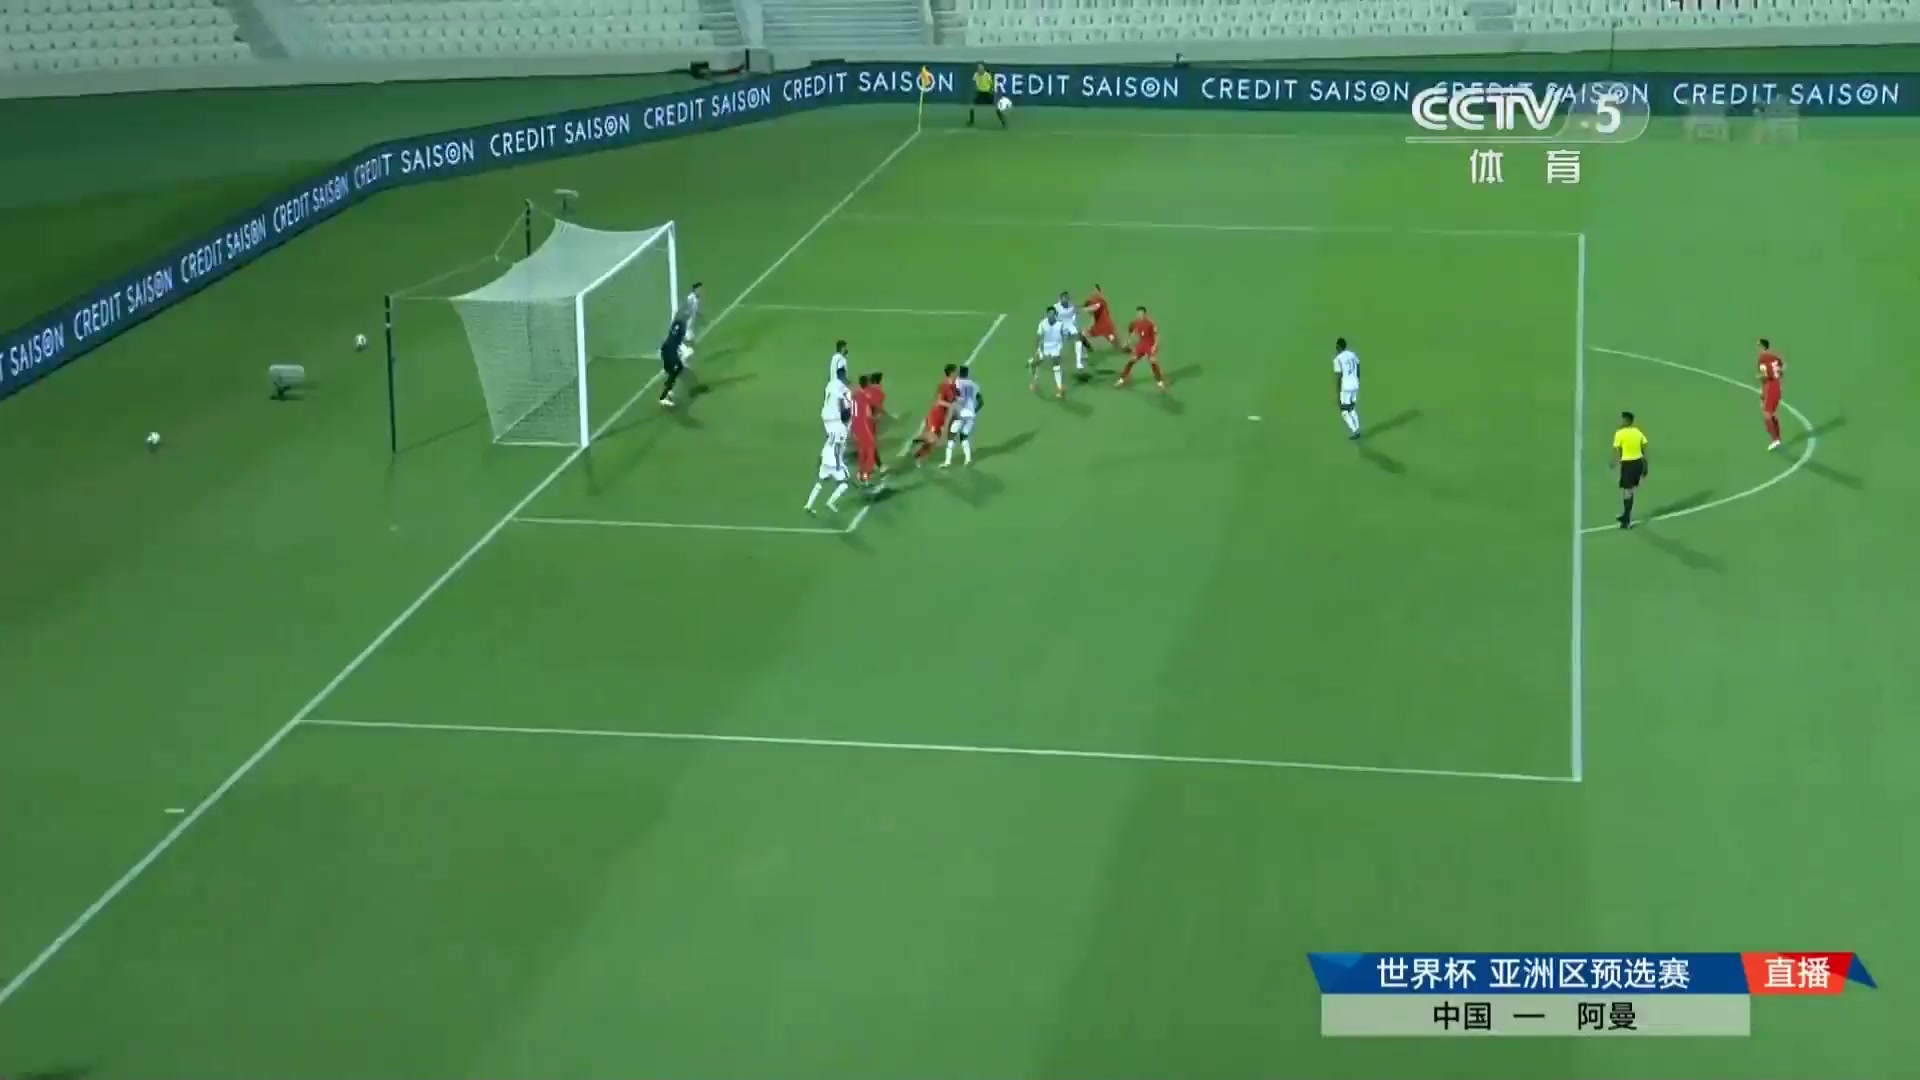 FIFA WCQL China Vs Oman Wu Lei Goal in 20 min, Score 1:0